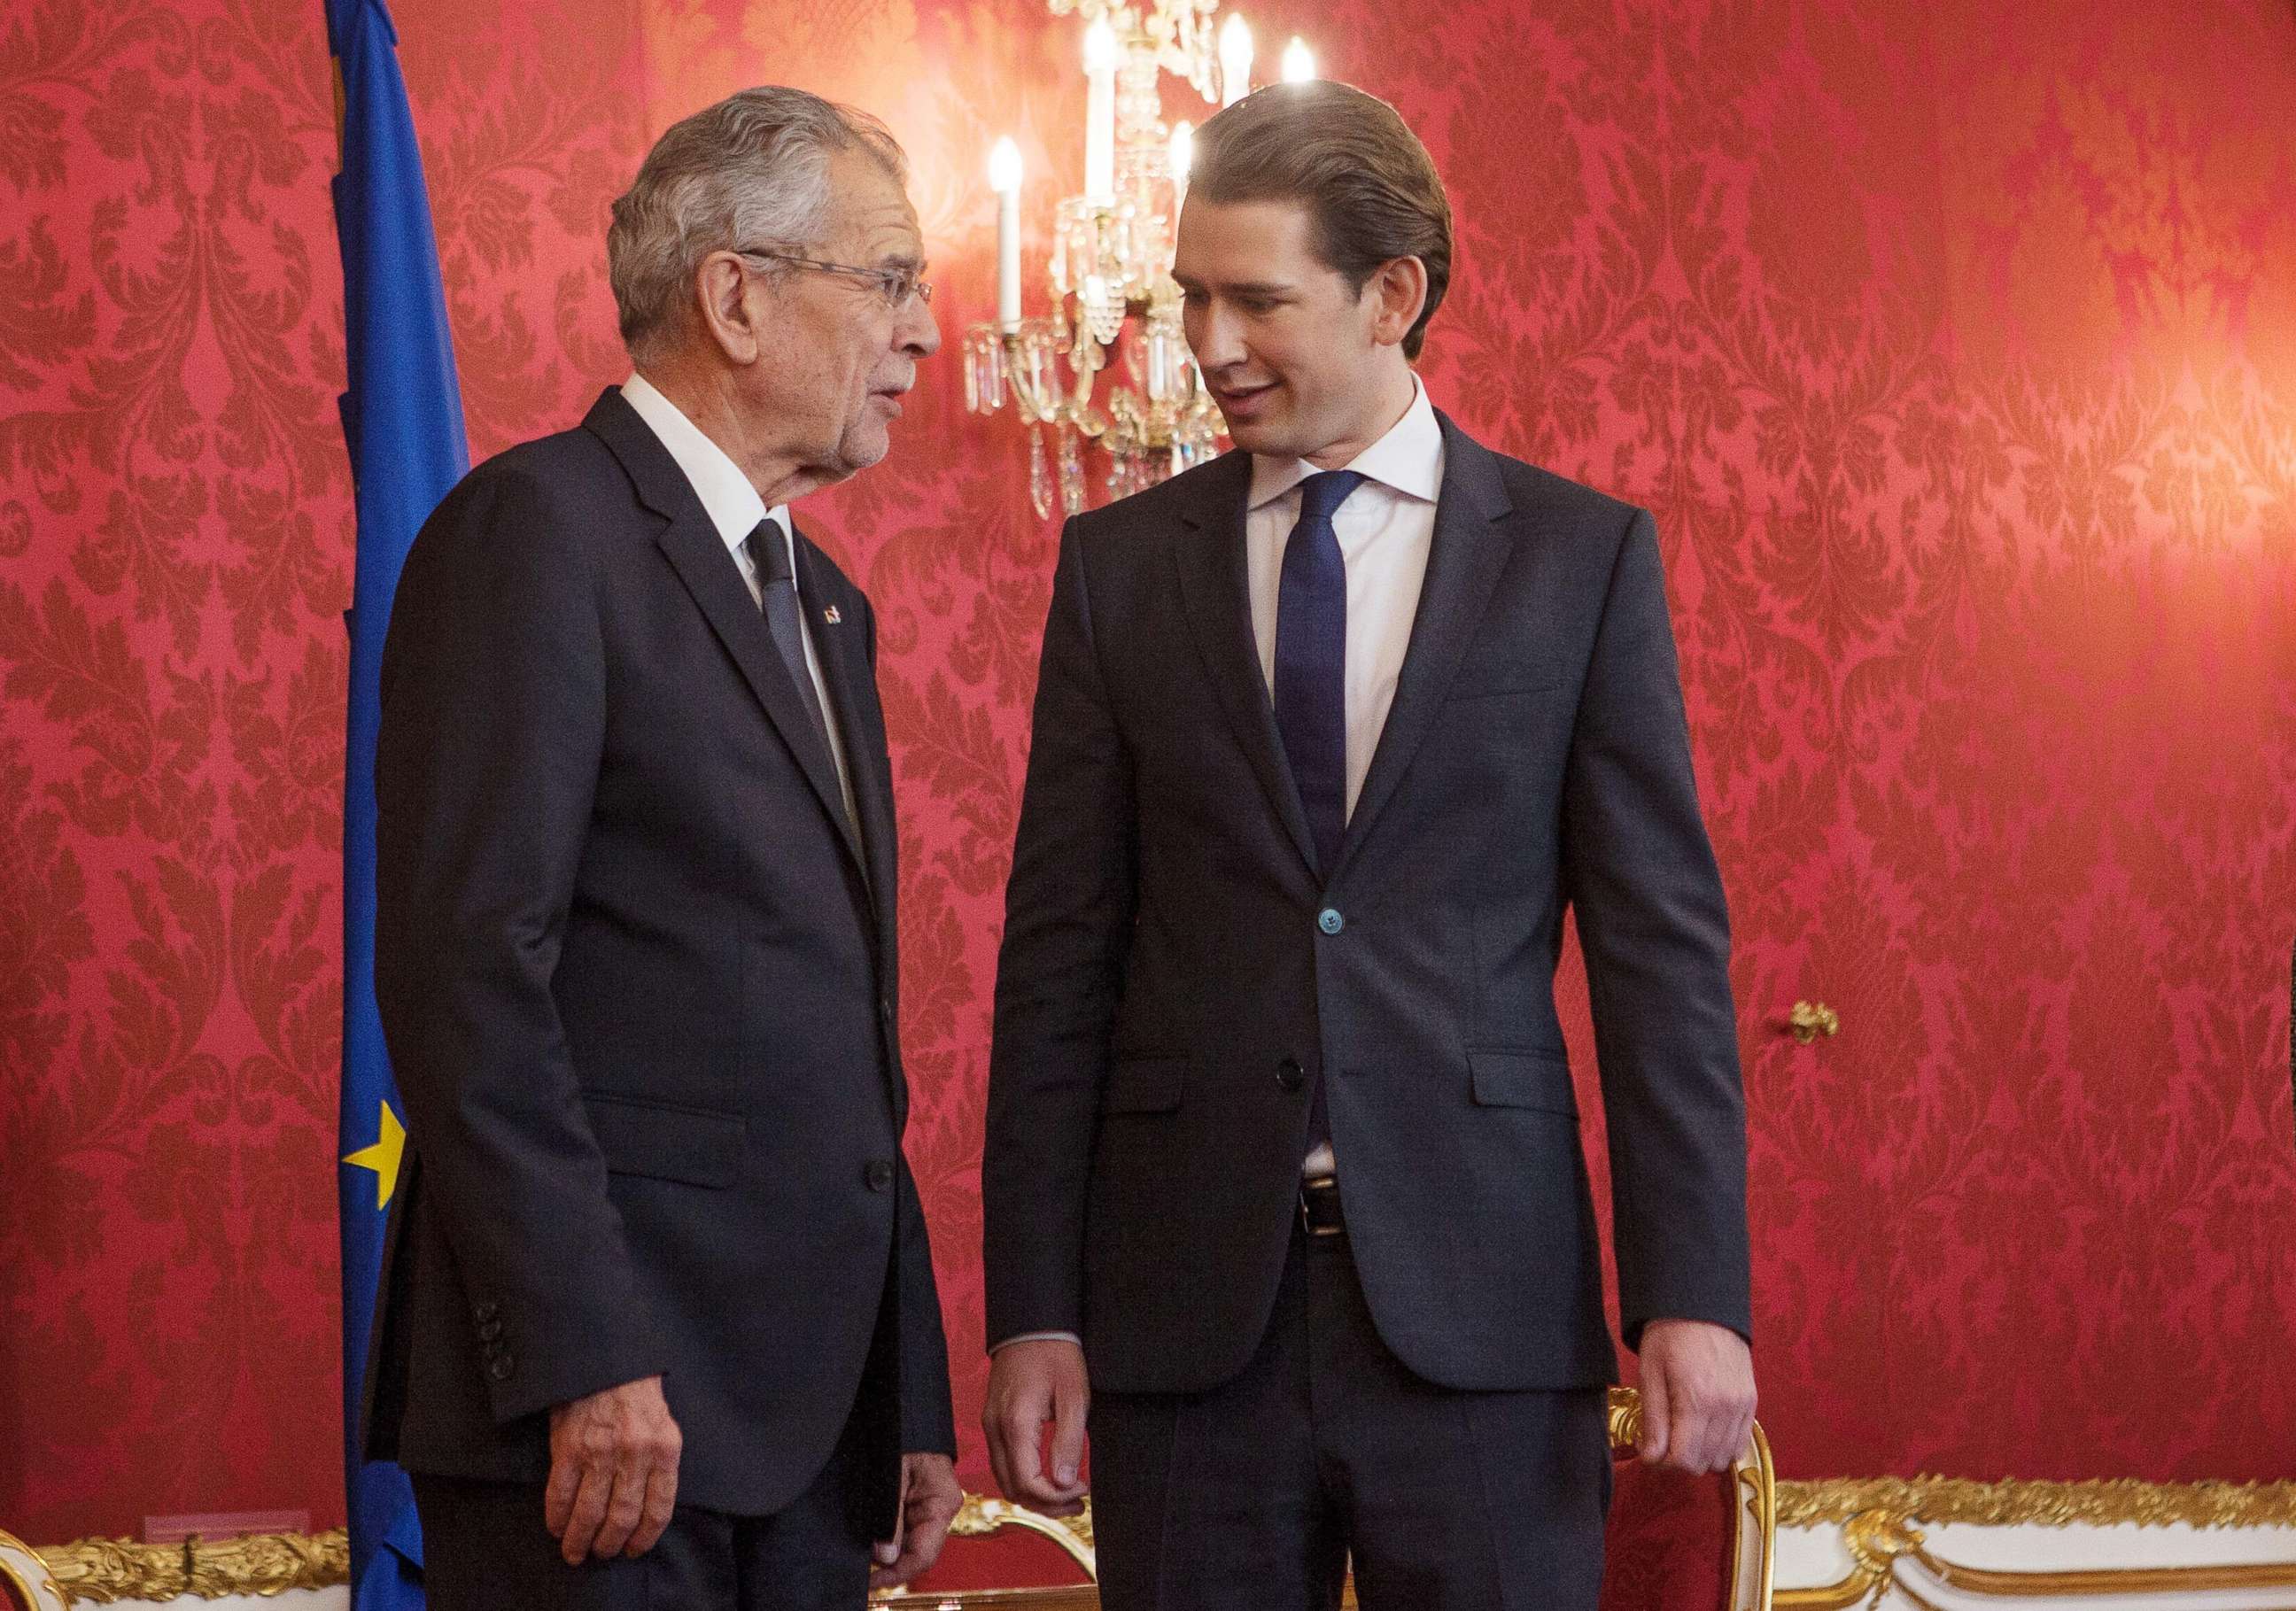 PHOTO: Austria's head of the OeVP party Sebastian Kurz talks with Austrian President Alexander Van der Bellen during a meeting in Vienna, Austria, on Oct. 17, 2017, following general elections. 